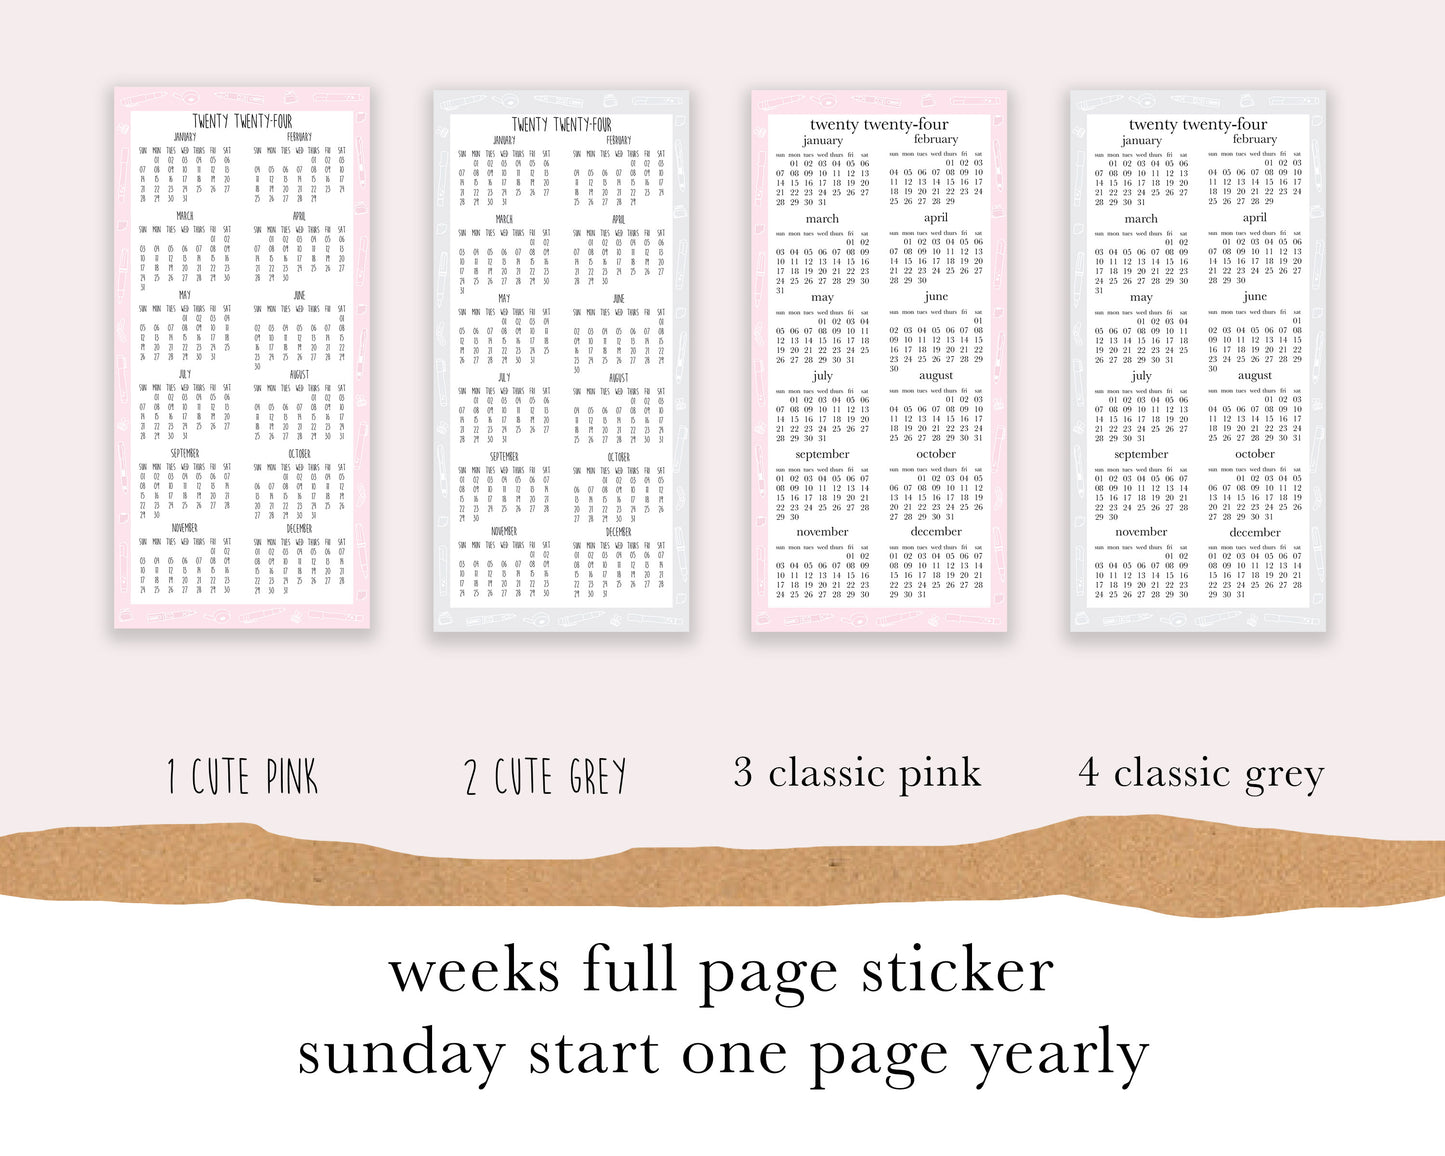 Sunday Start 1 page |Weeks| Full Page Sticker |2024